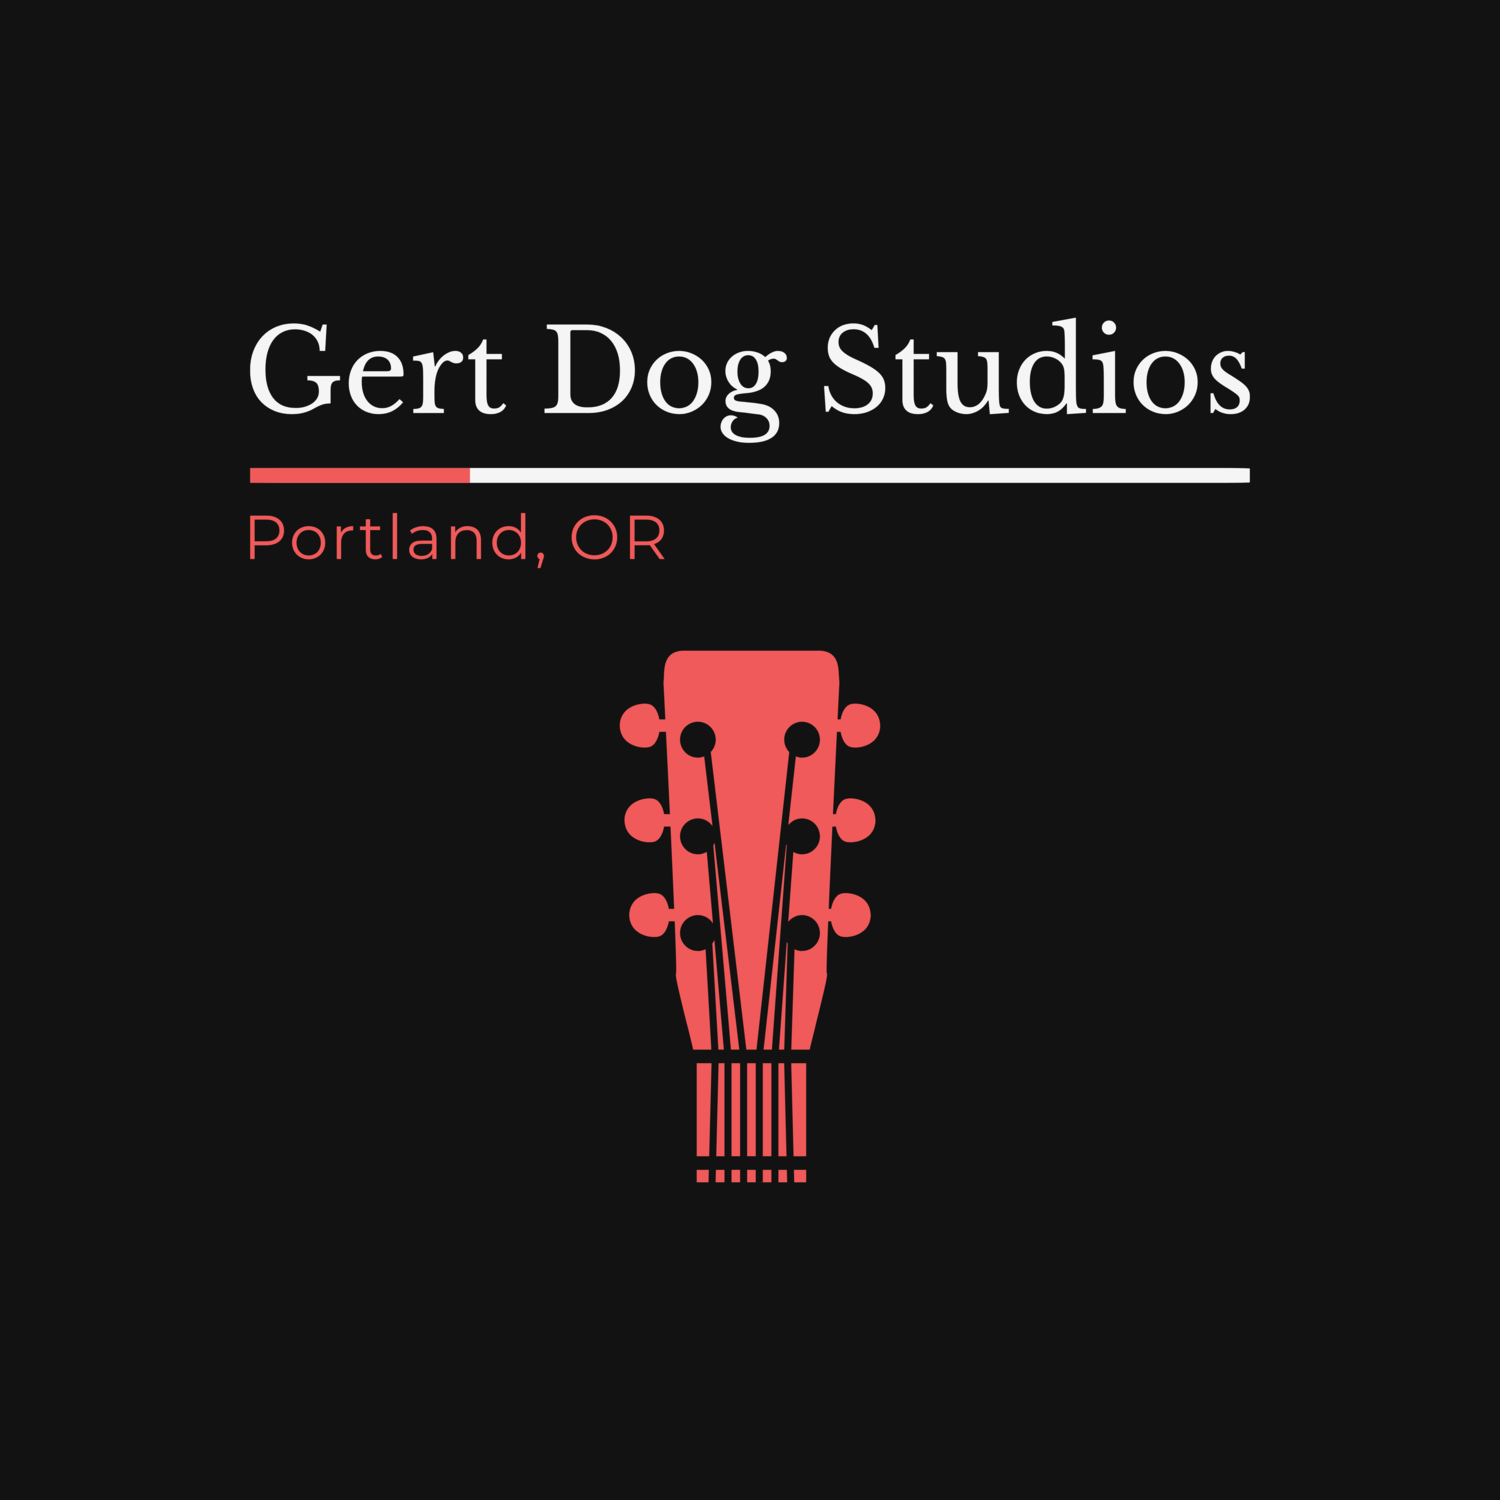 GERT DOG STUDIOS